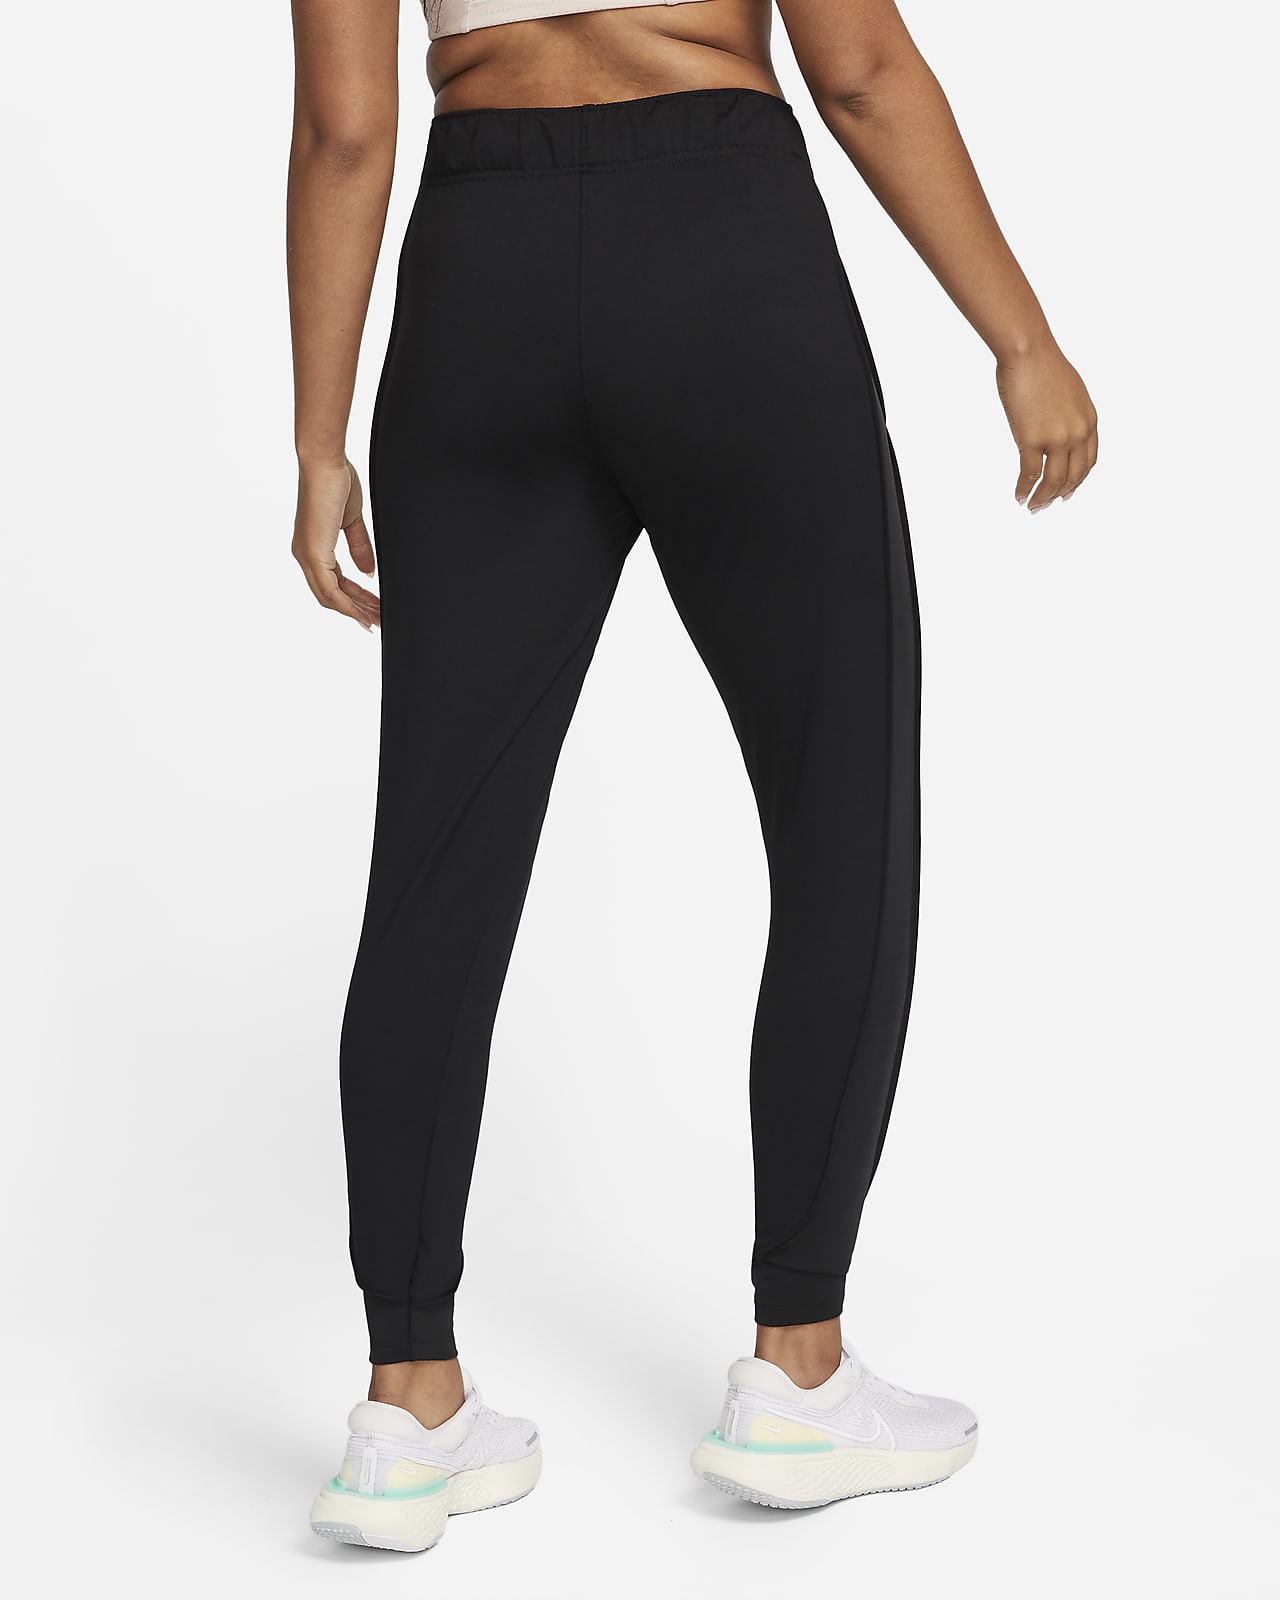 Nike Essential Women's Running Pants